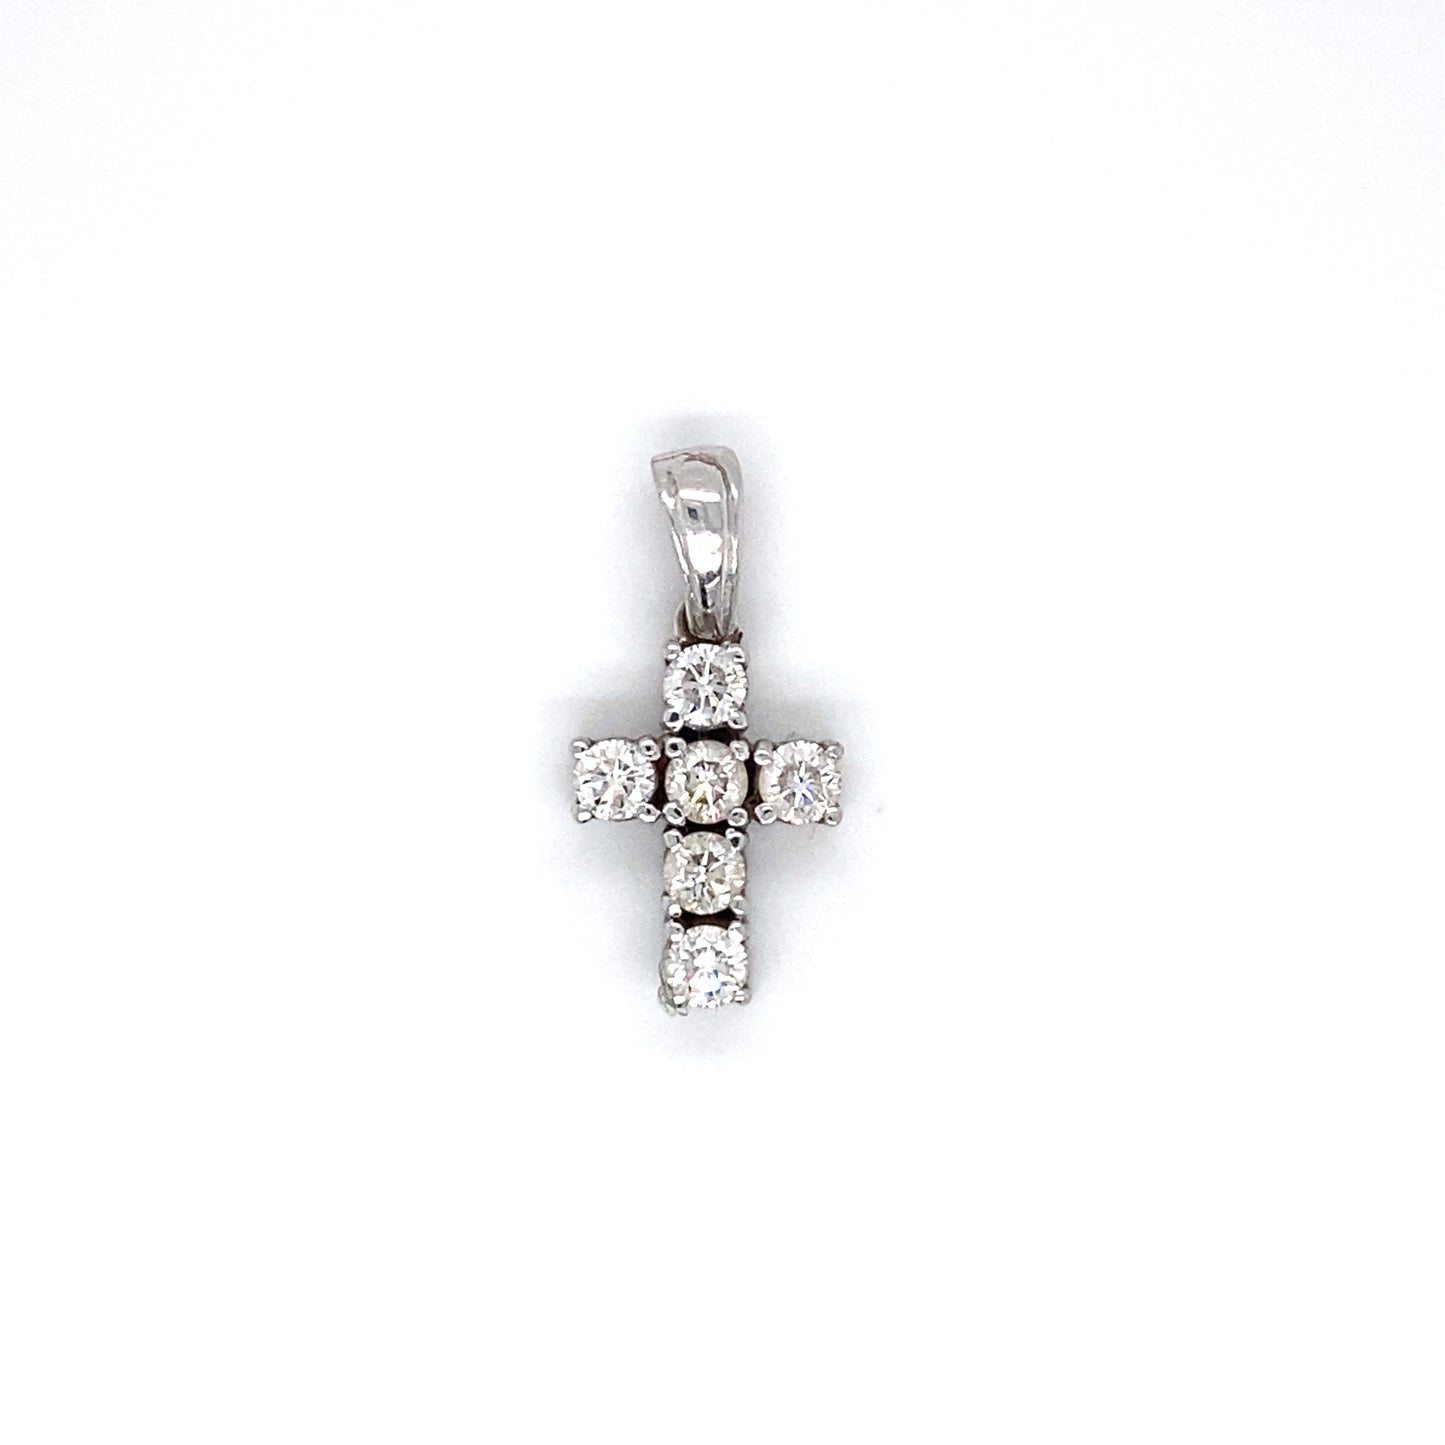 Circa 1990s 1.0 Carat Diamond Cross Pendant in 14K White Gold